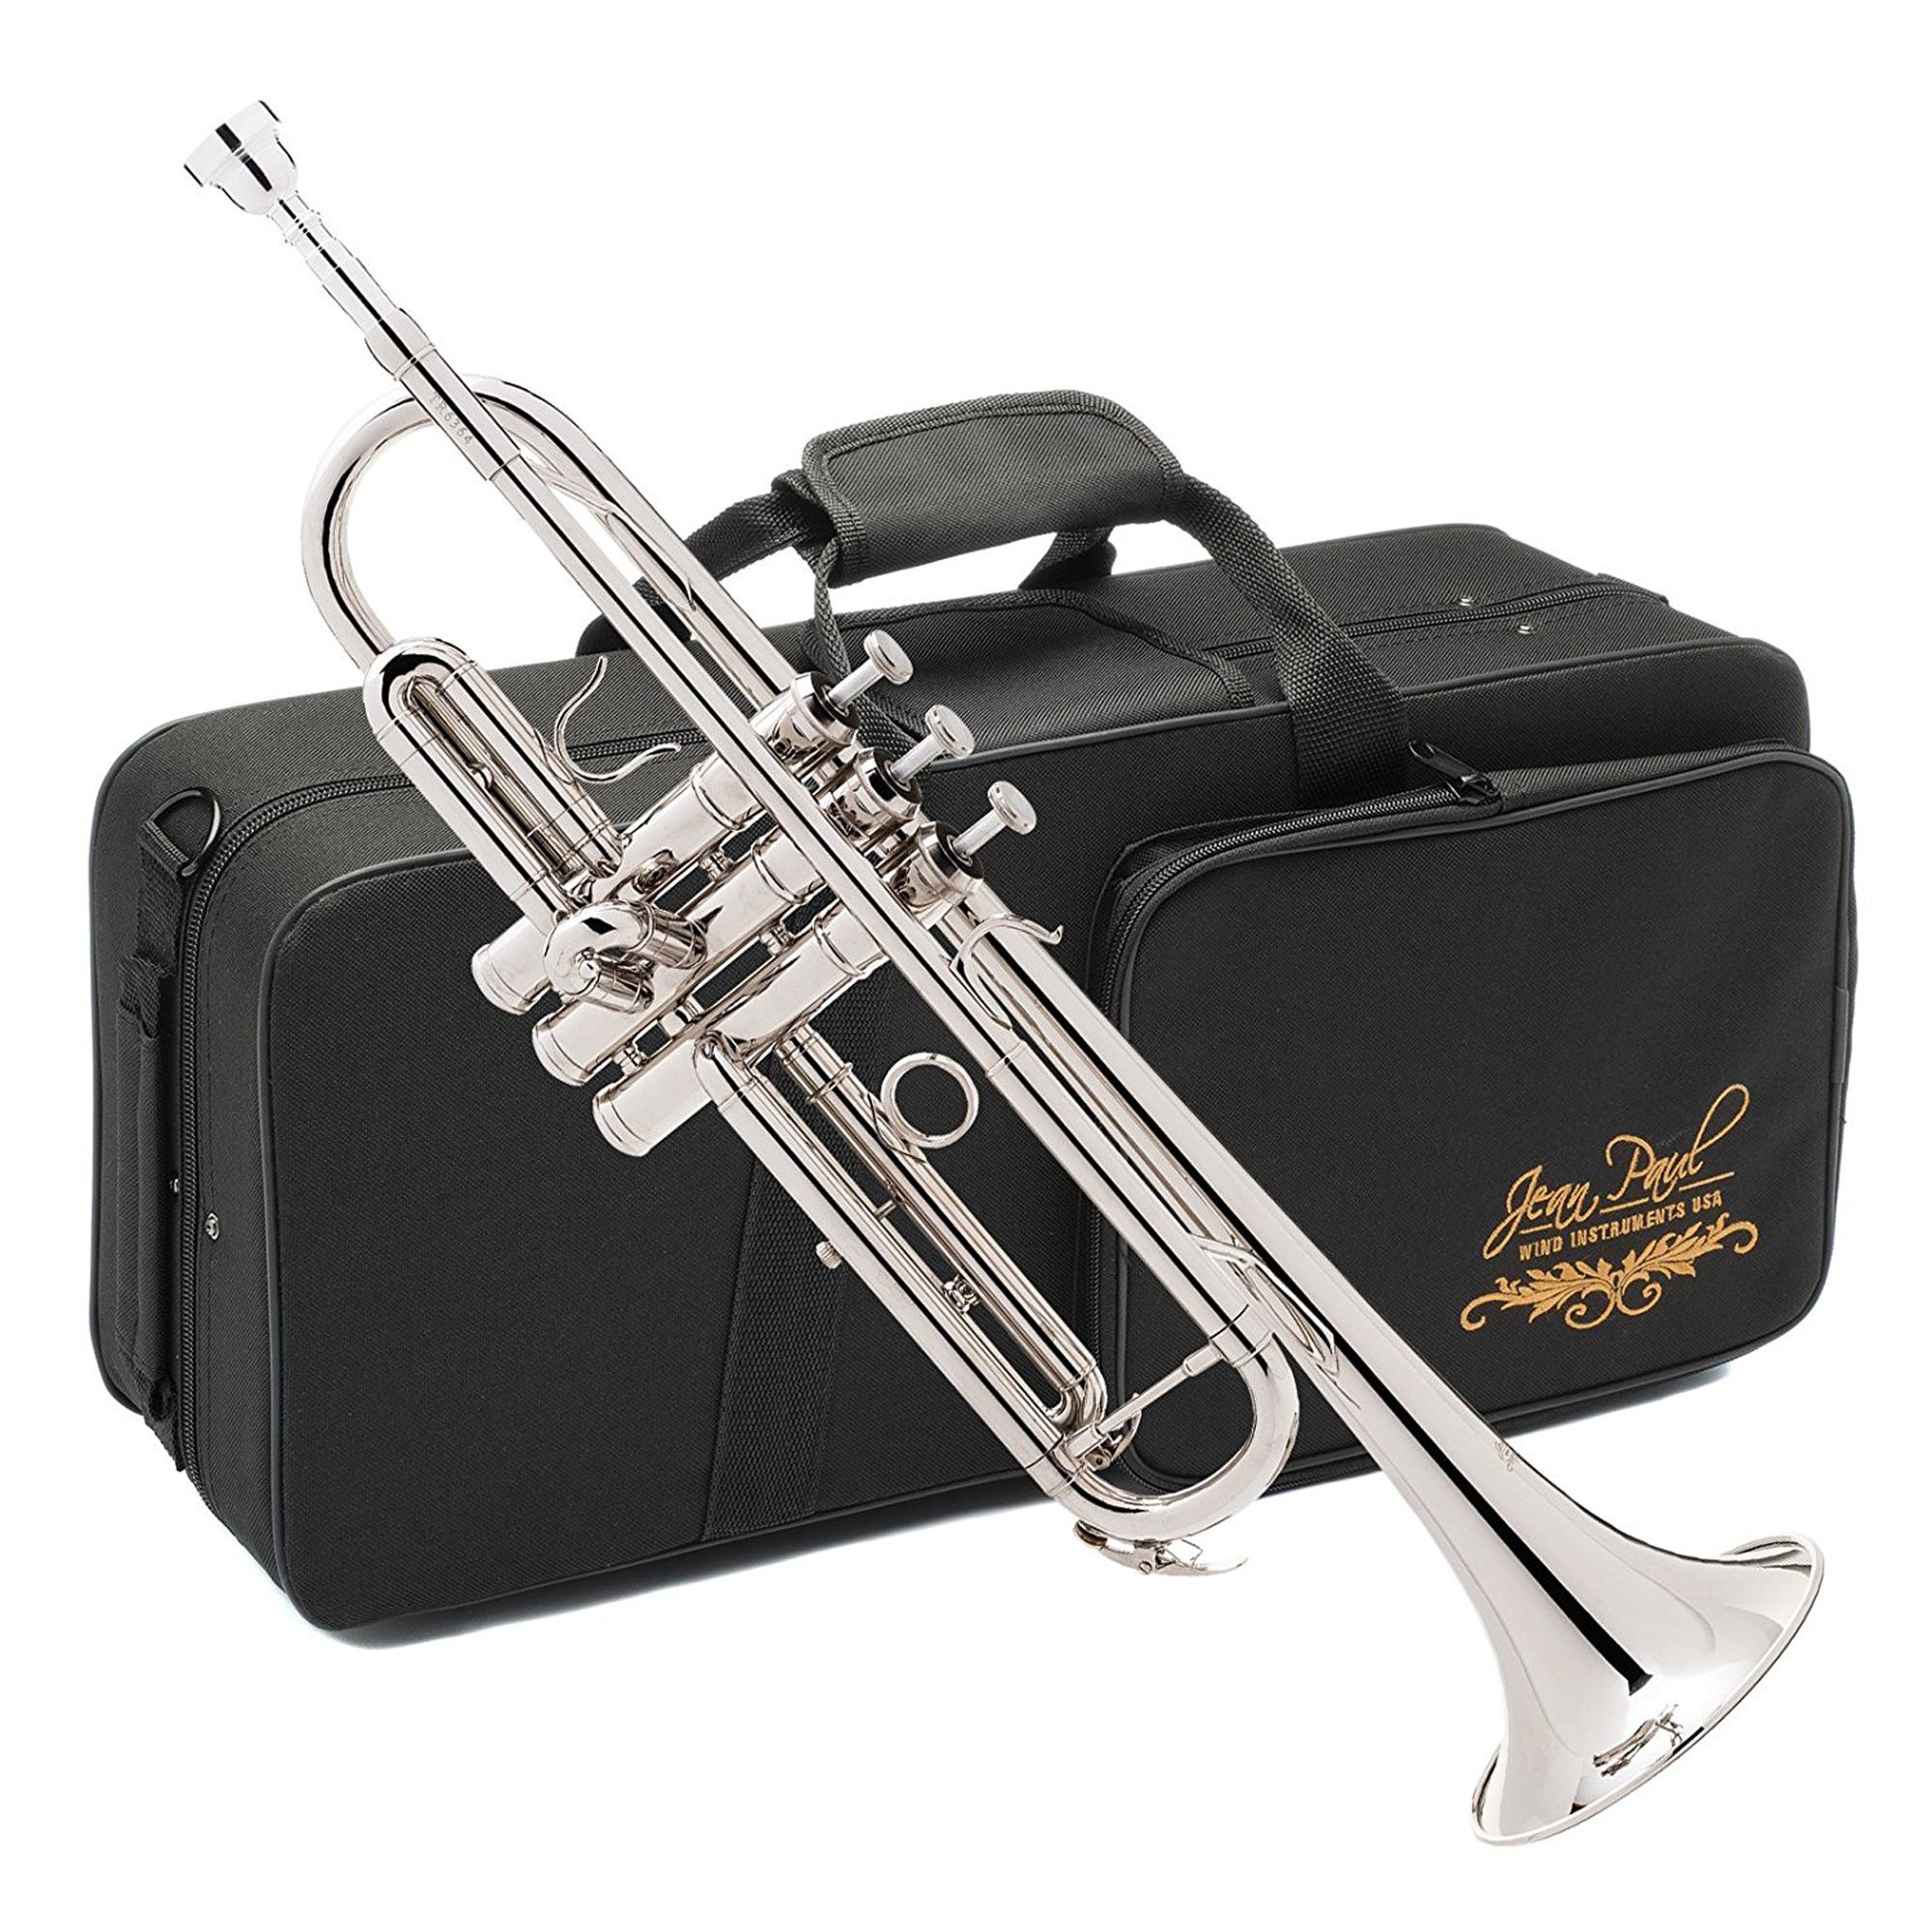 Jean Paul TR-330N Nickel Trumpet with Care Kit